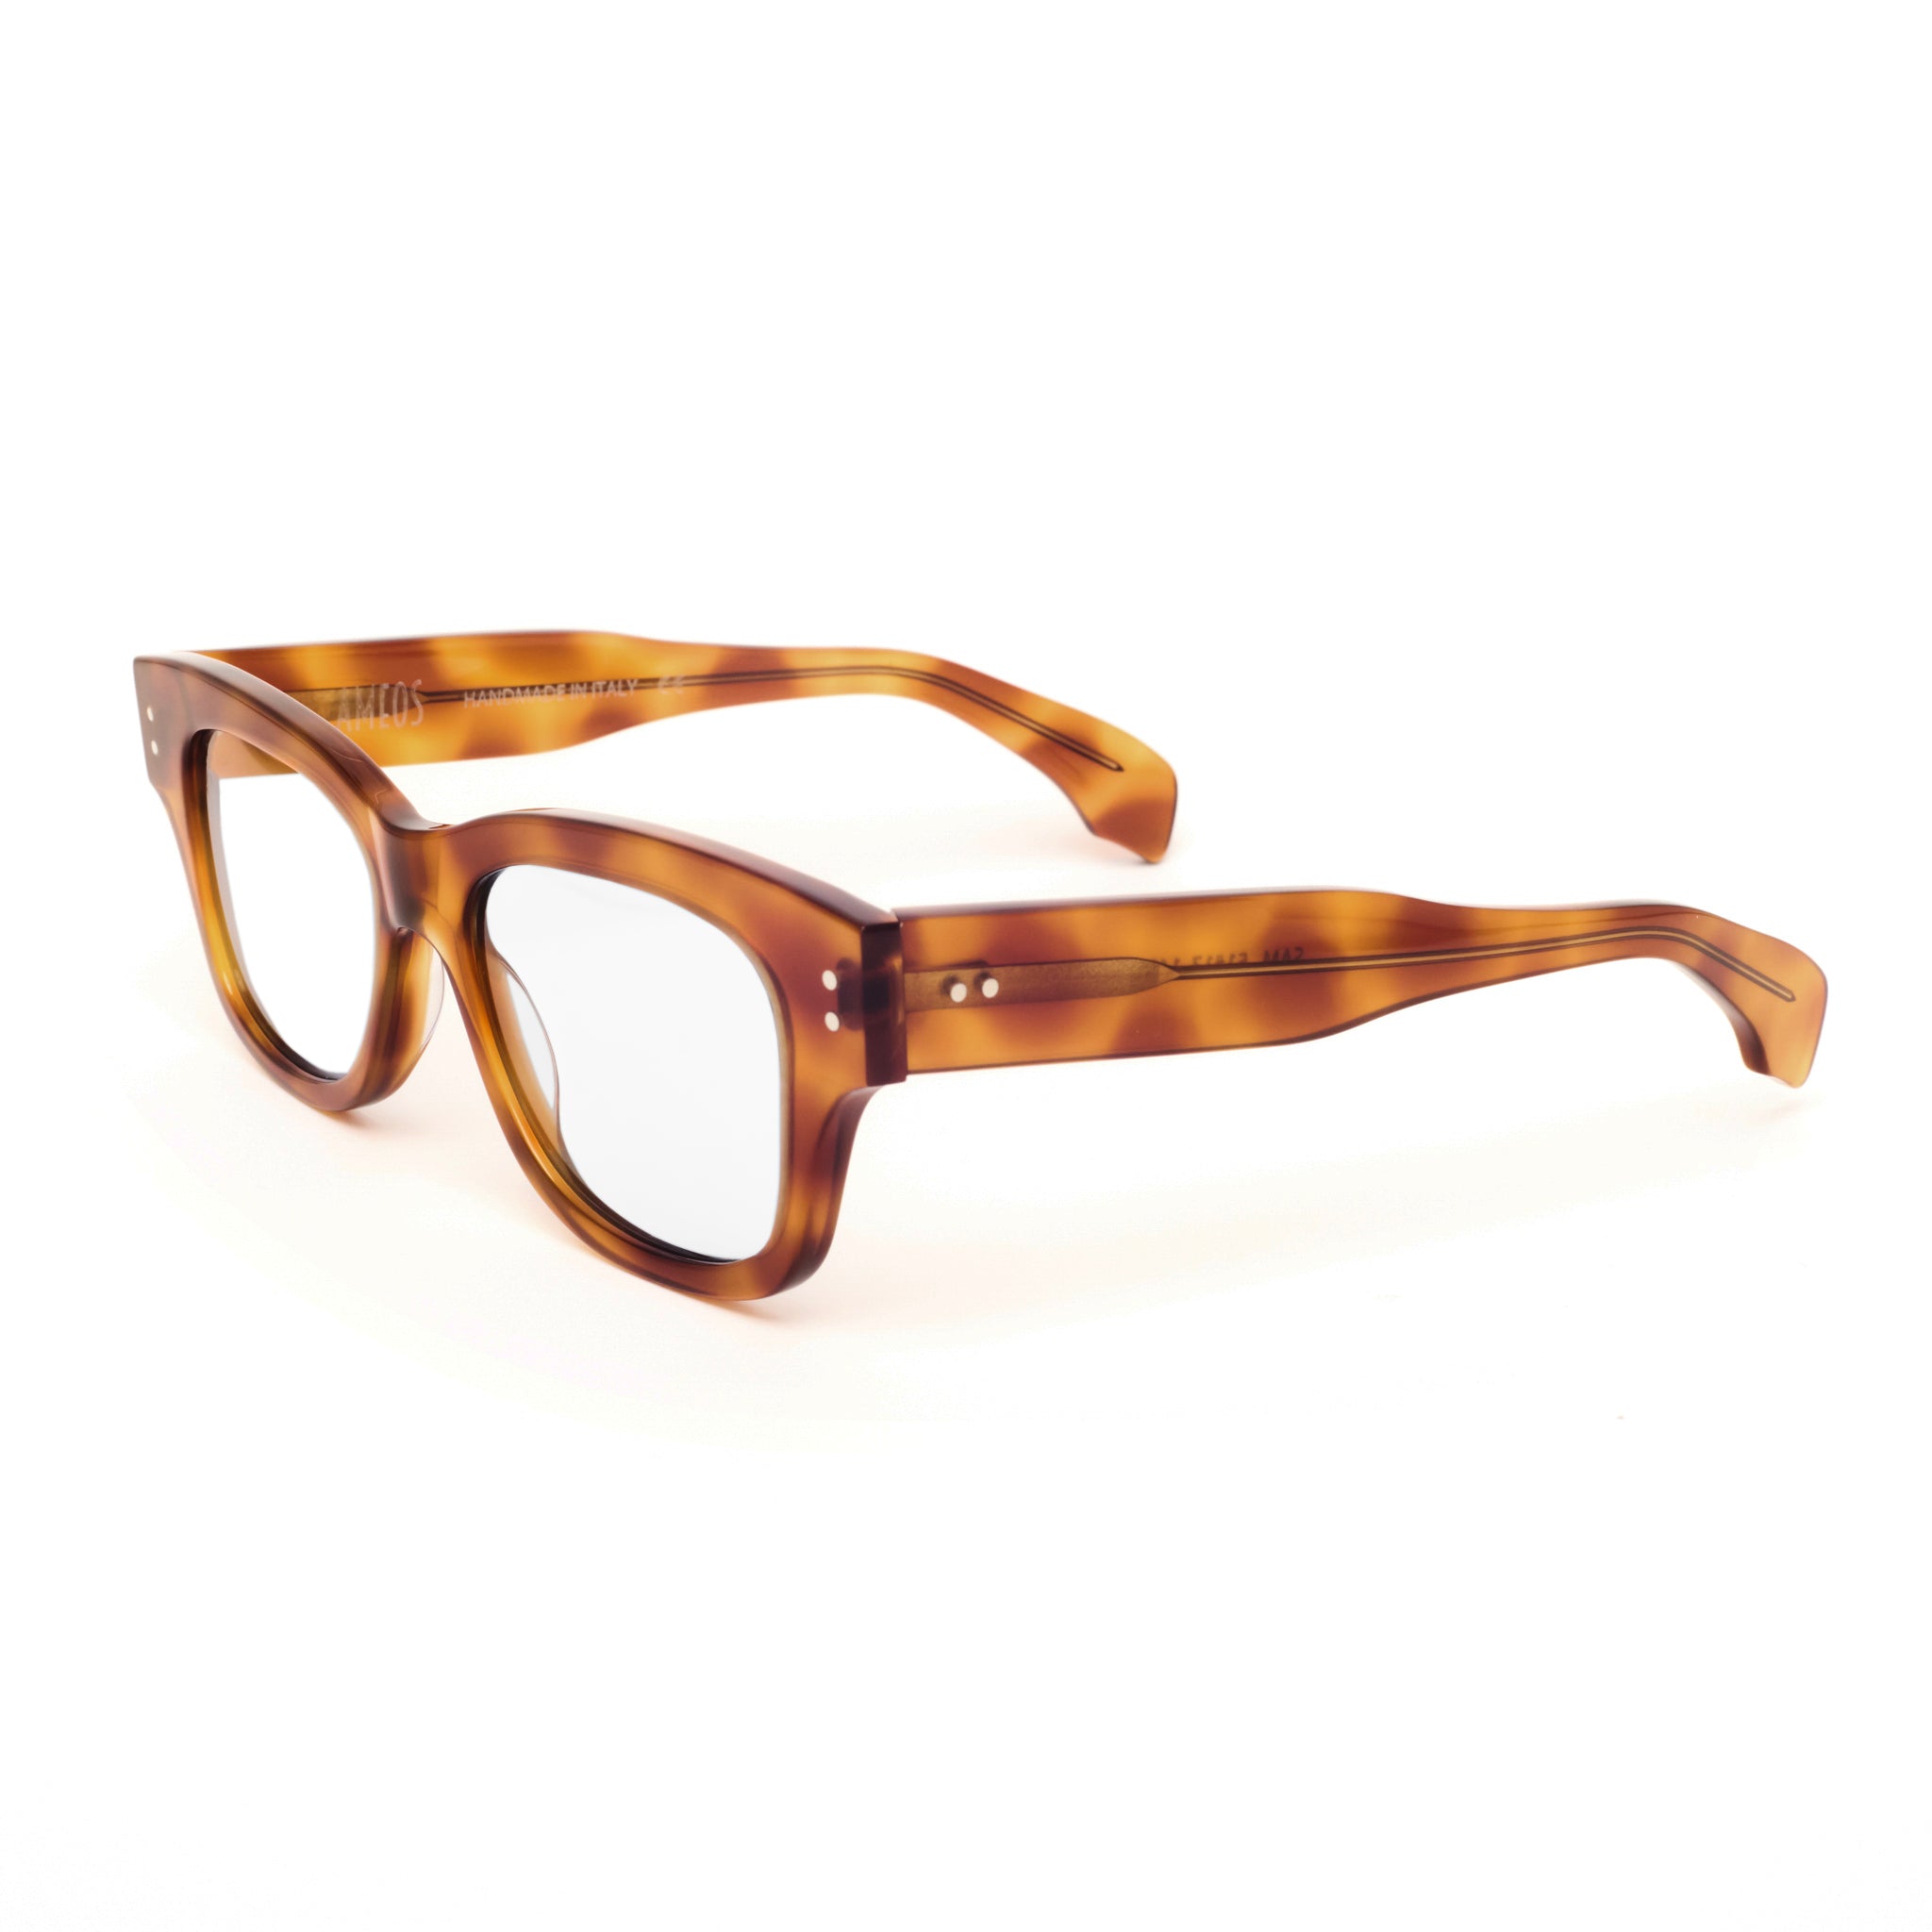 Ameos Forever collection Sam optical glasses. Tortoise frames and unisex eyewear.